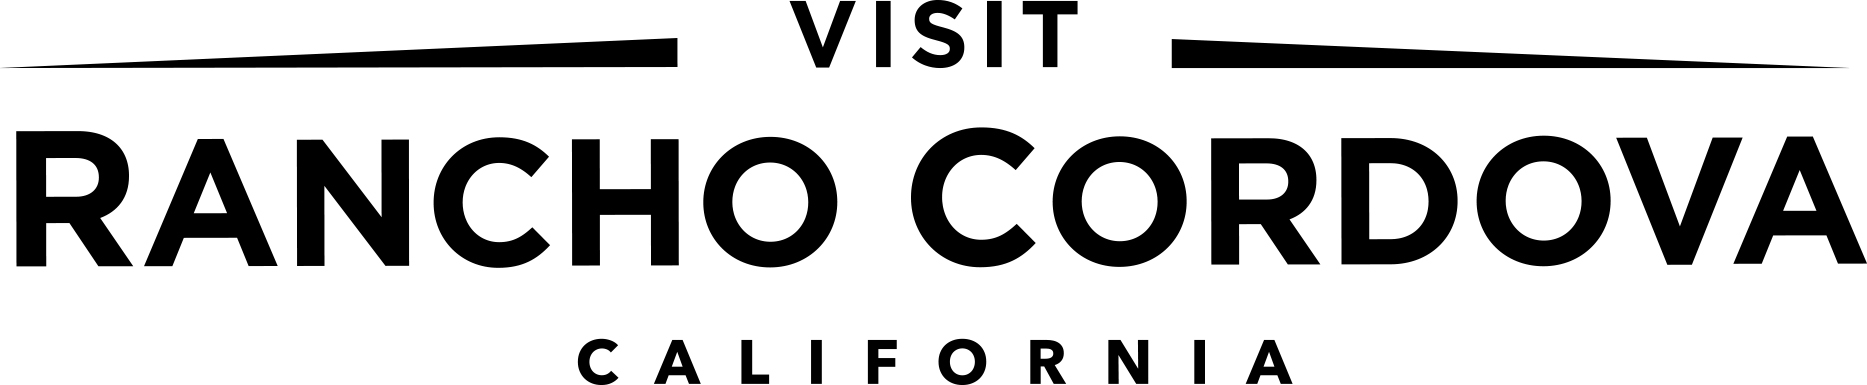 Visit Rancho Cordova logo 300x68